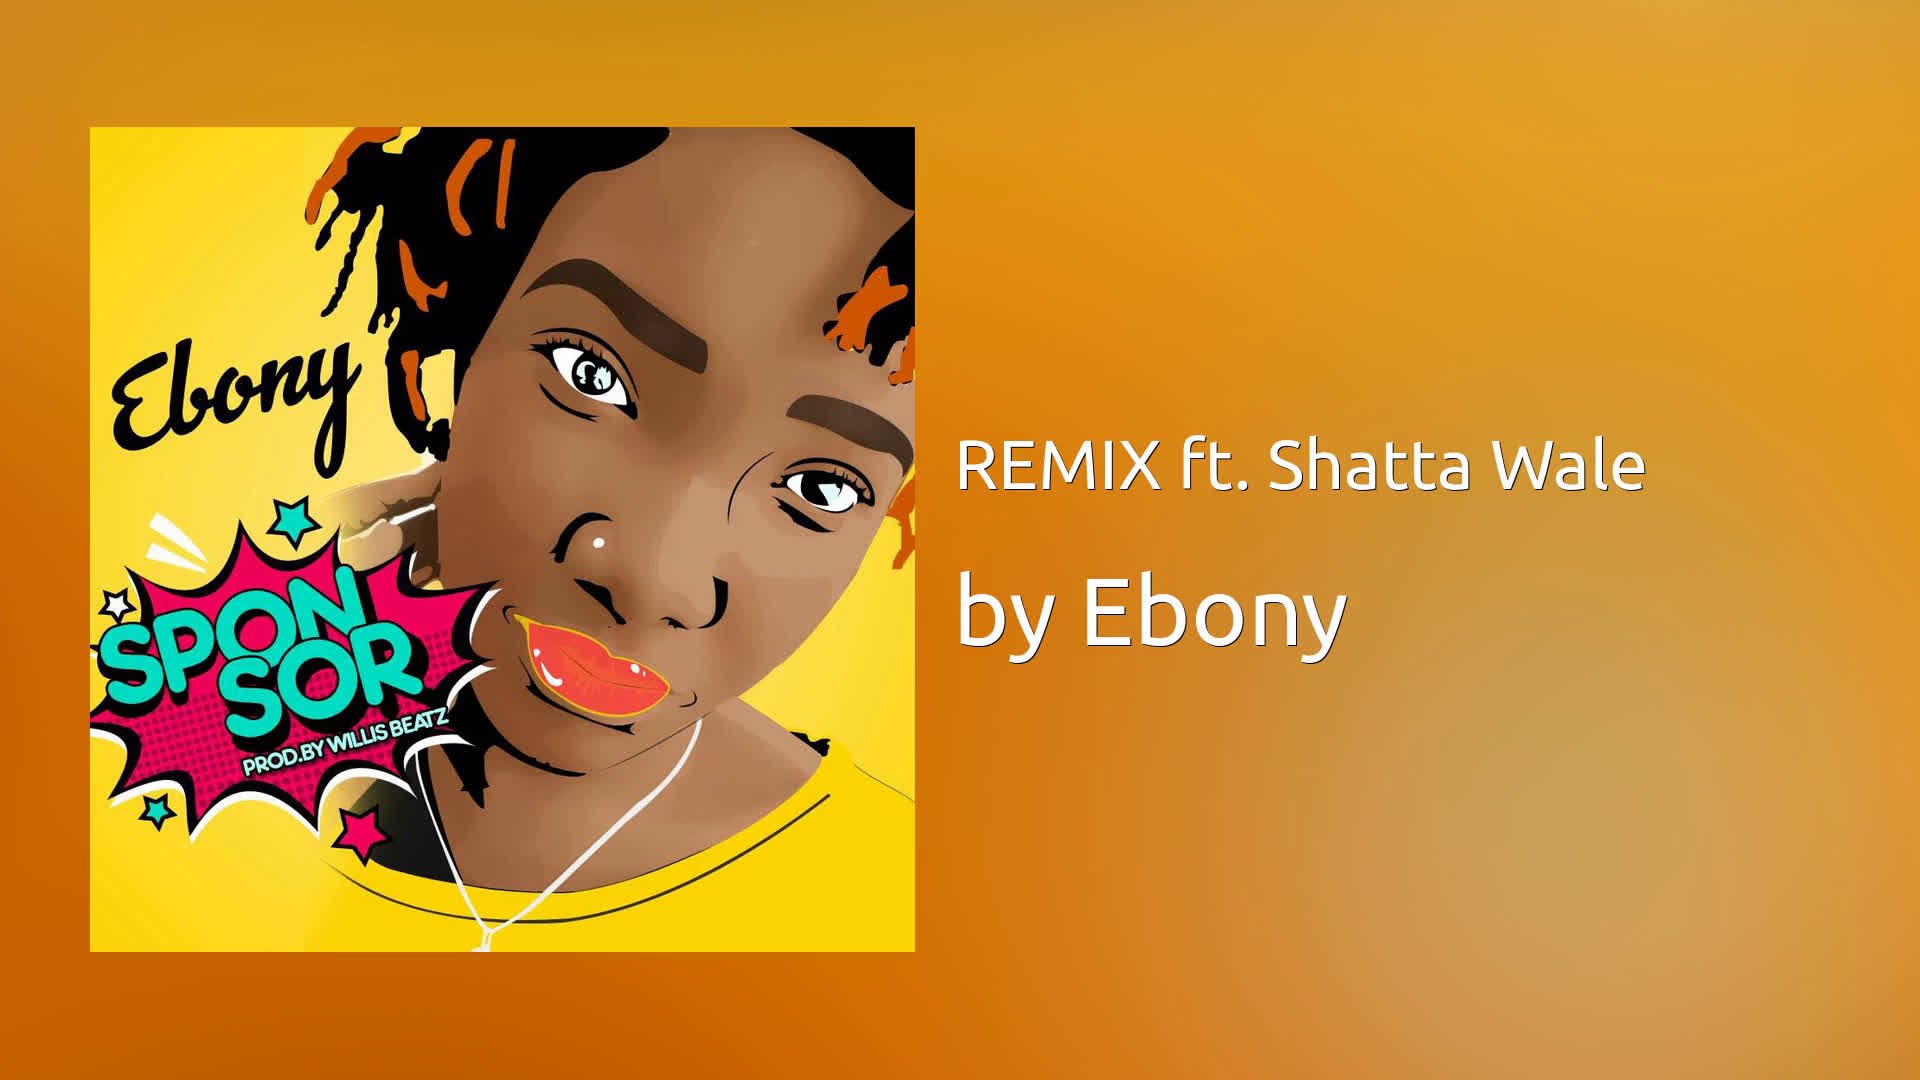 Ebony sponsor remix